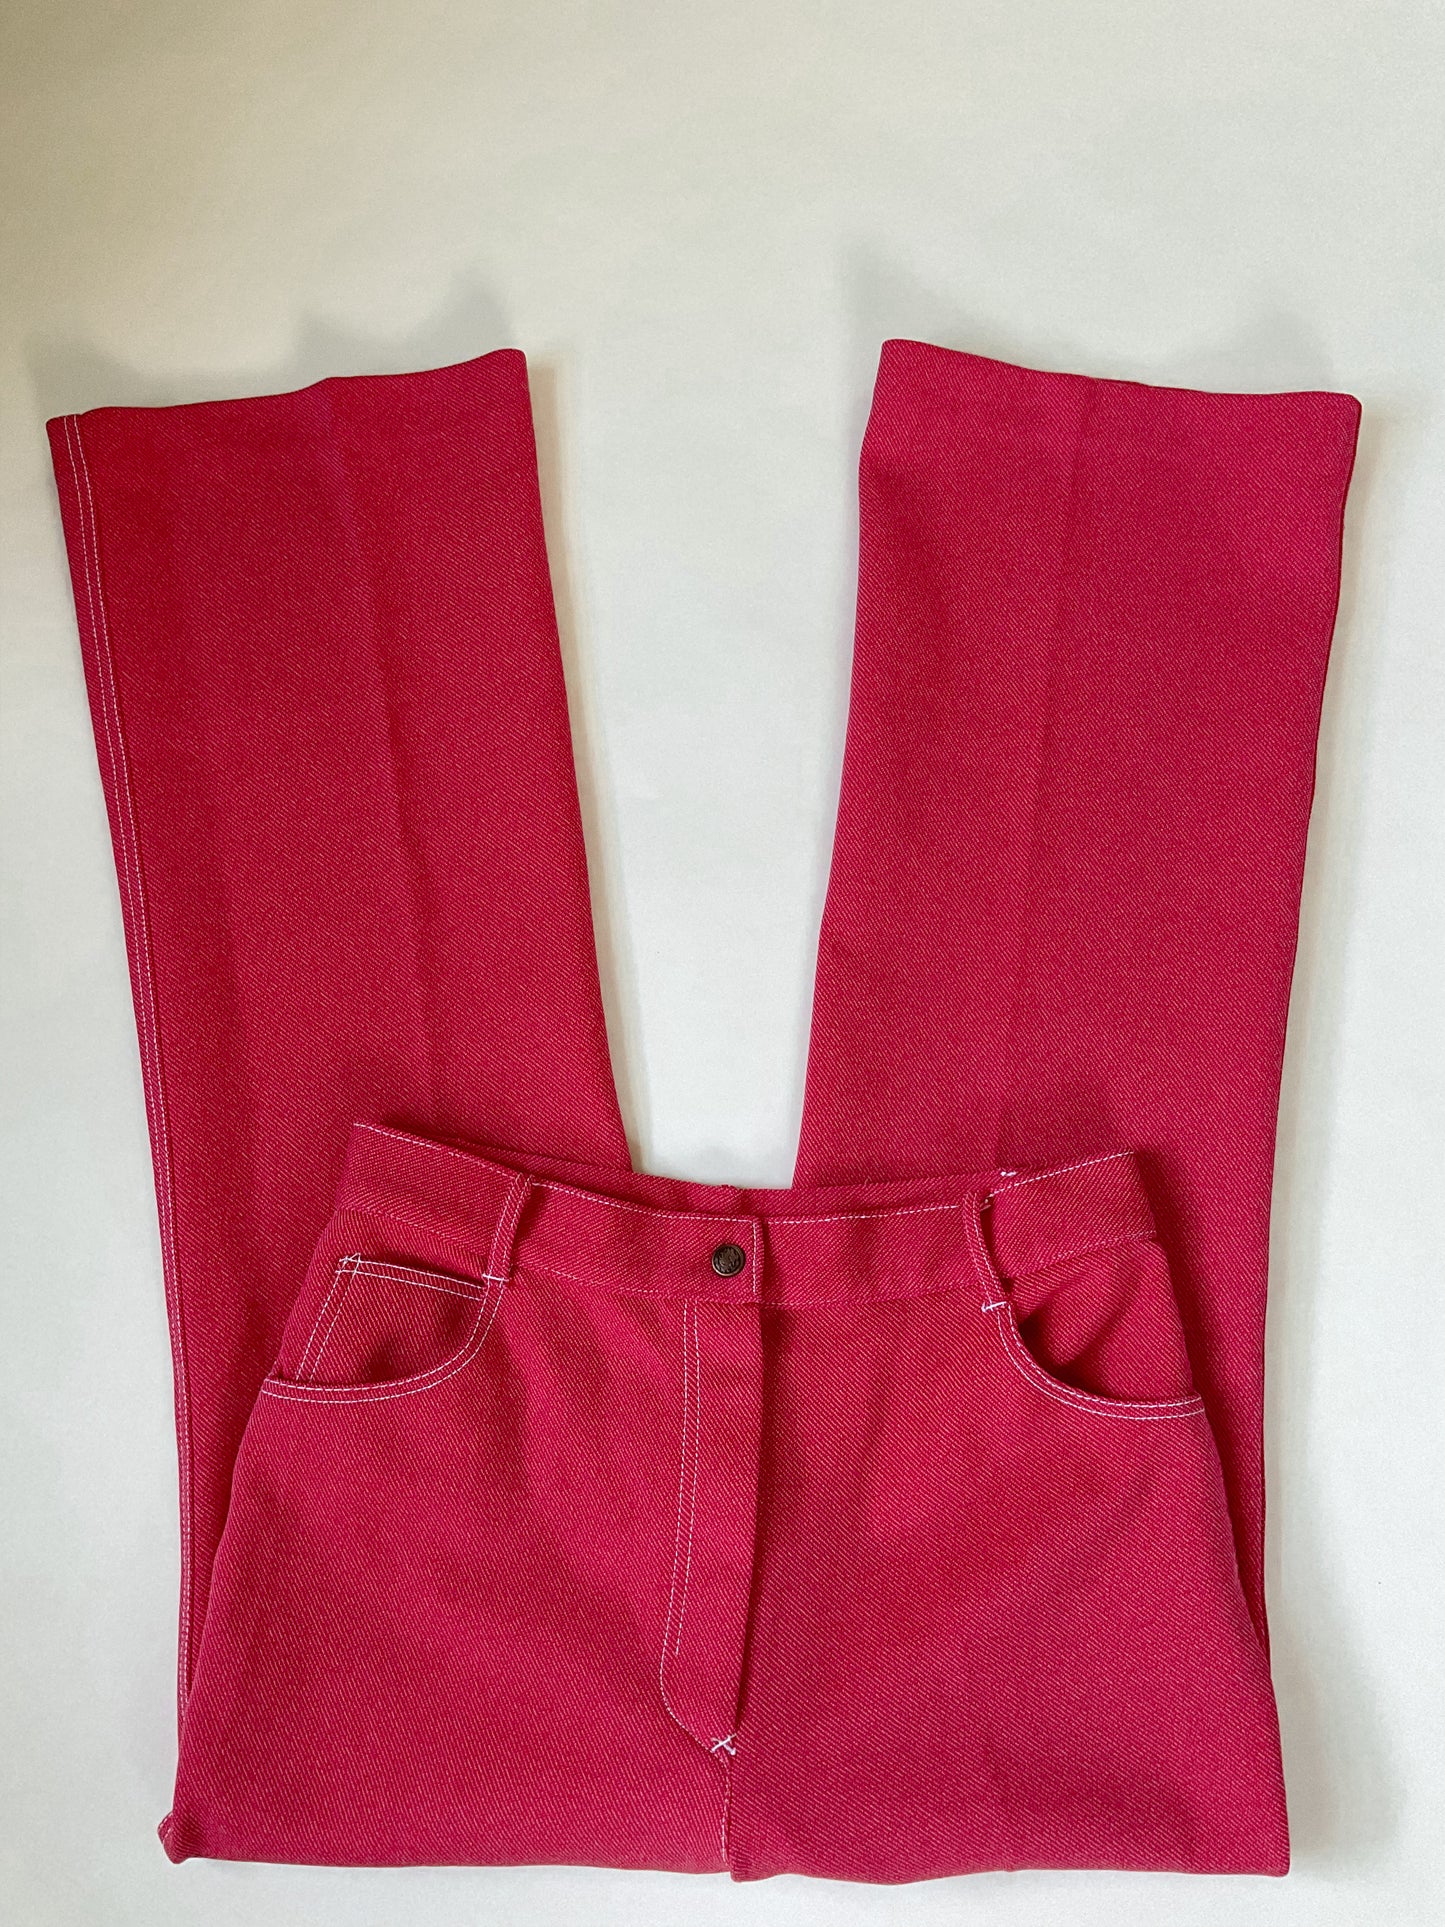 Vintage Sears 70s style Red Pants